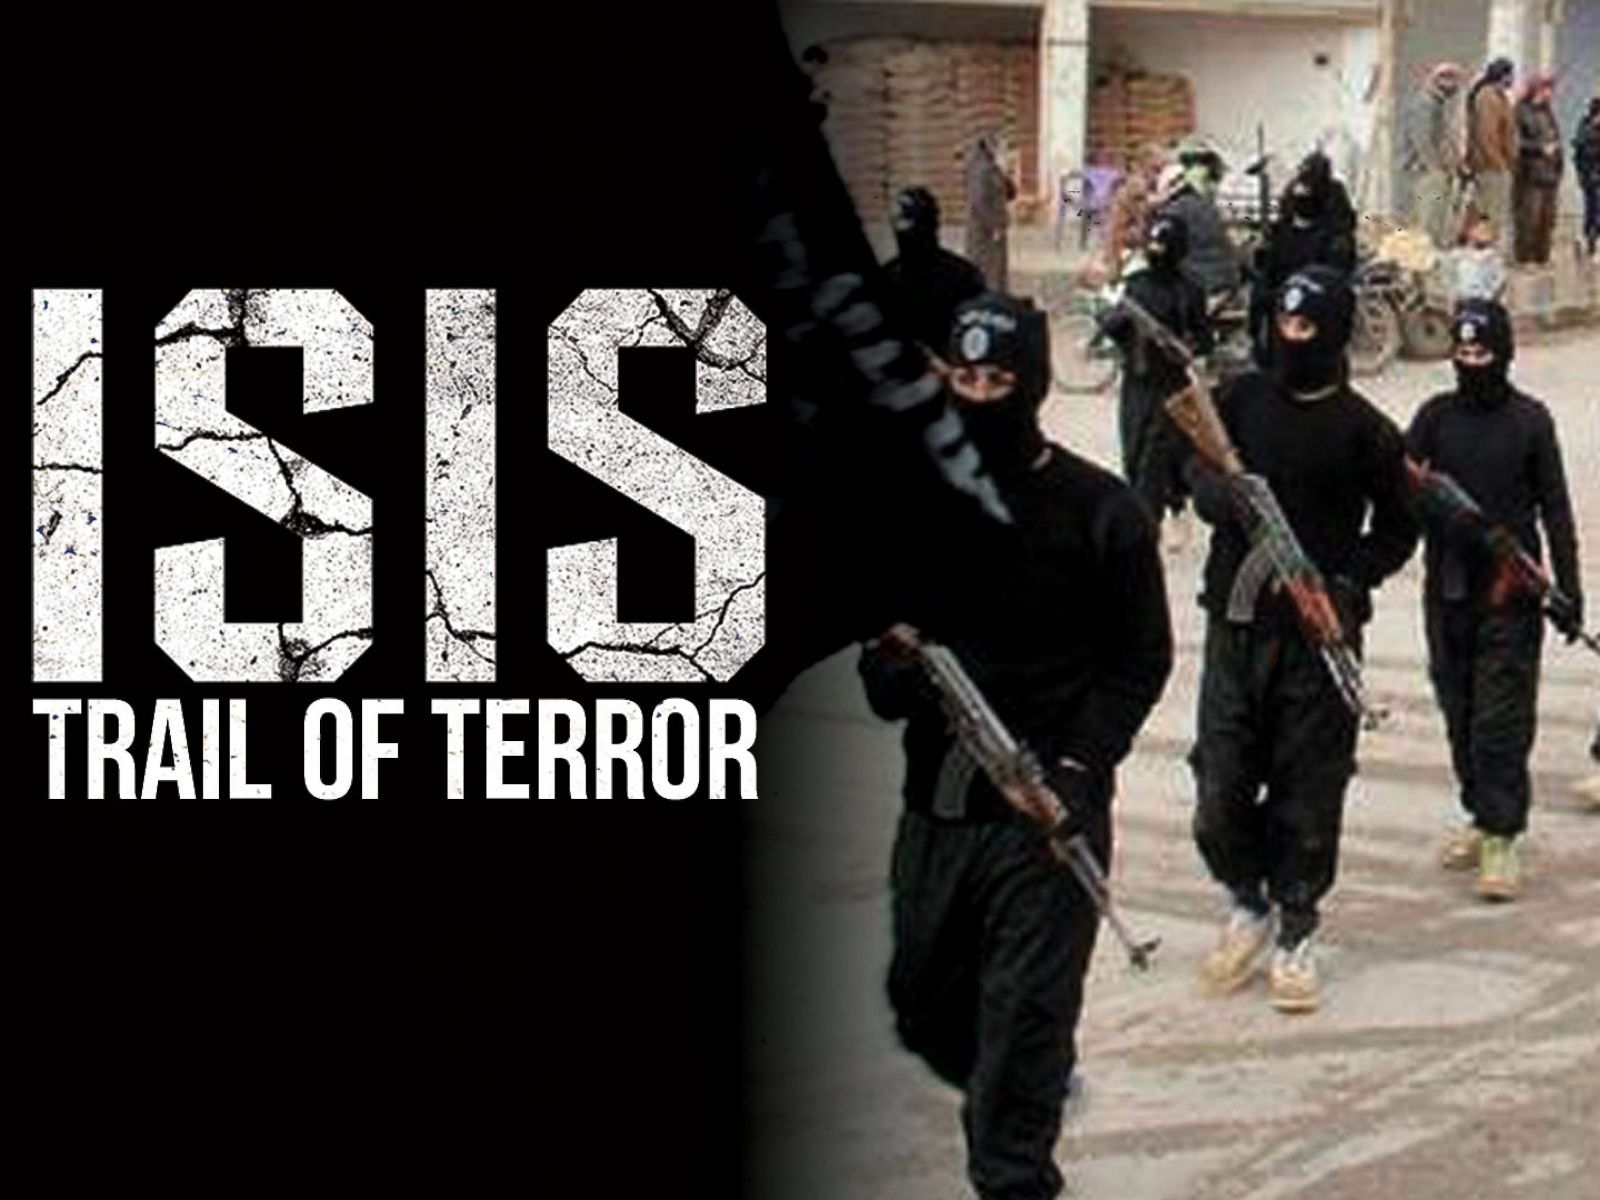 ISIS_TRAIL_OF_TERROR_4x3_1600.jpg